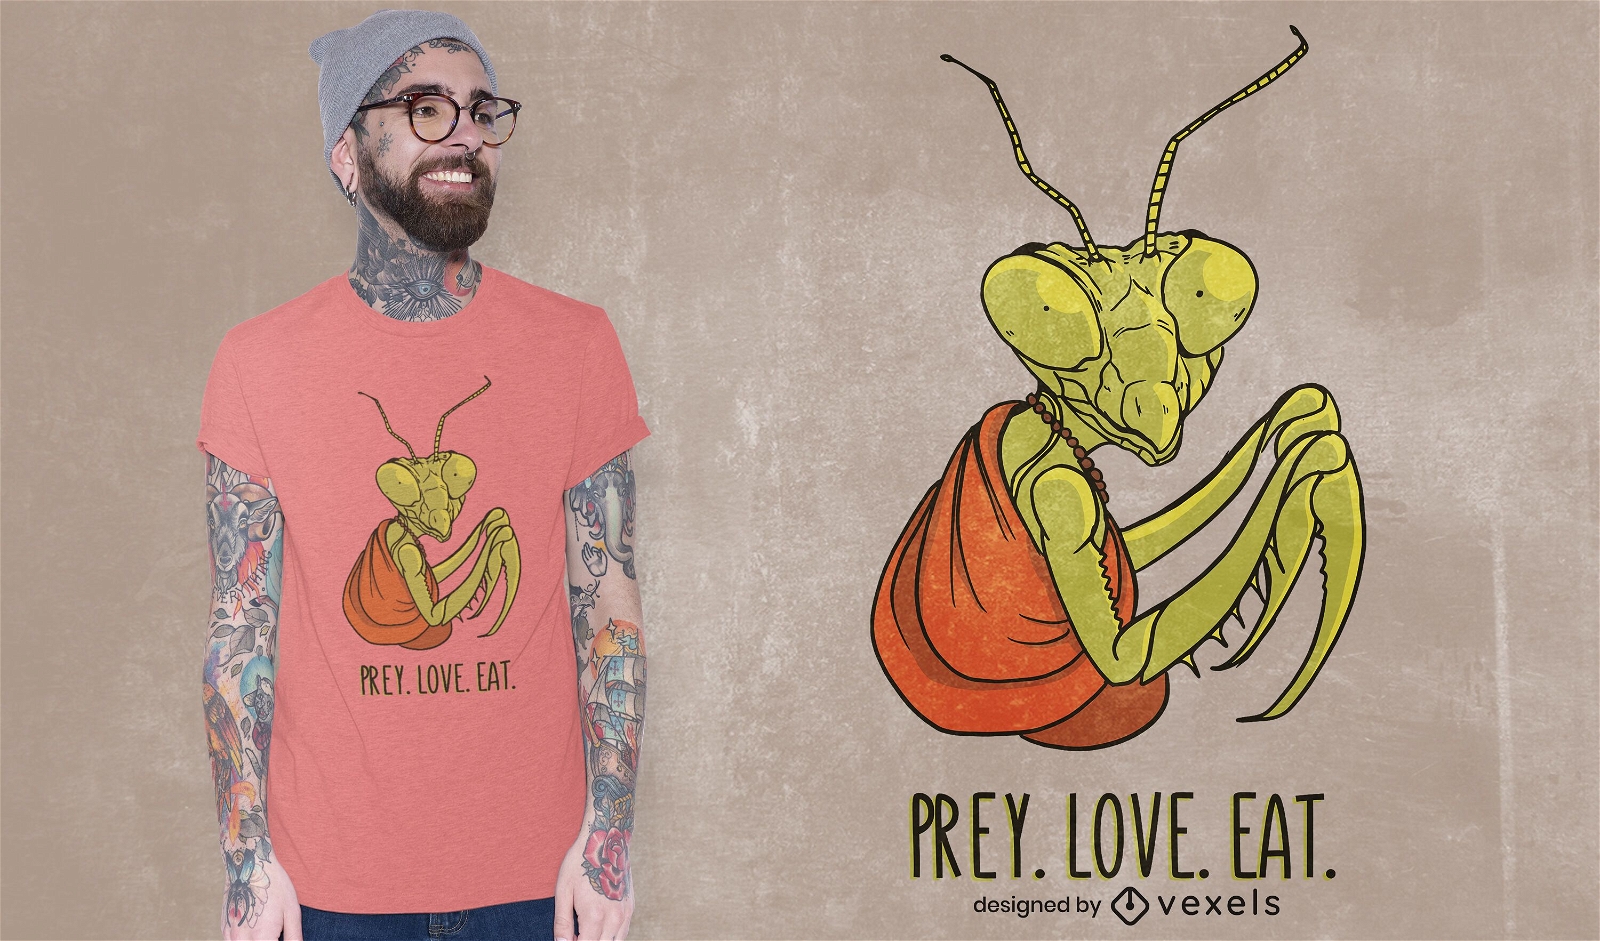 Prey love eat t-shirt design